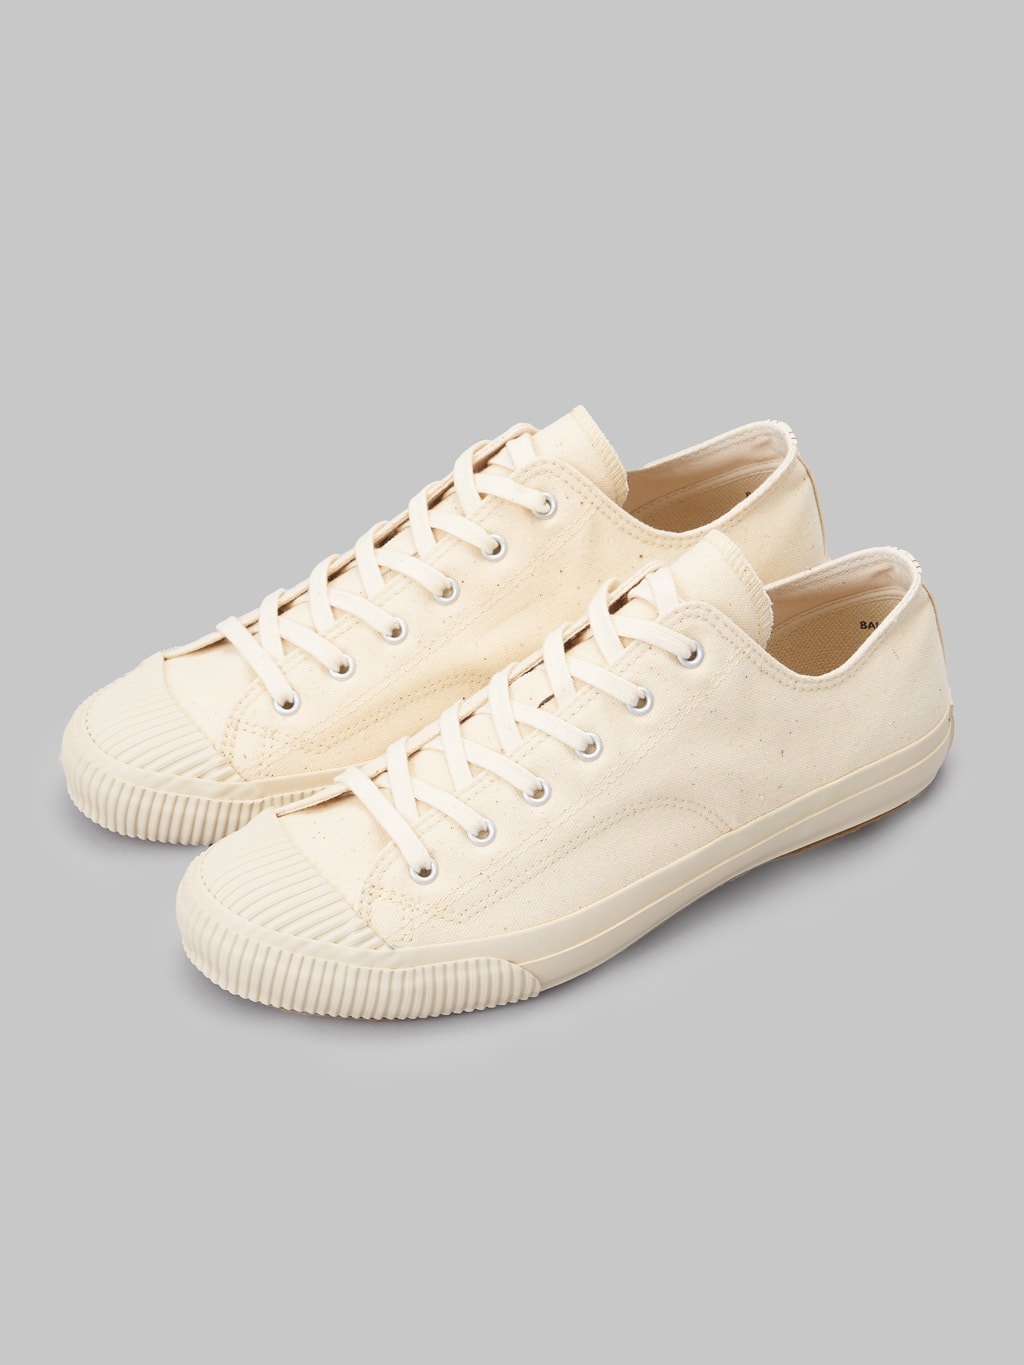 Pras Shellcap Low Sneakers Kinari off white vintage inspired